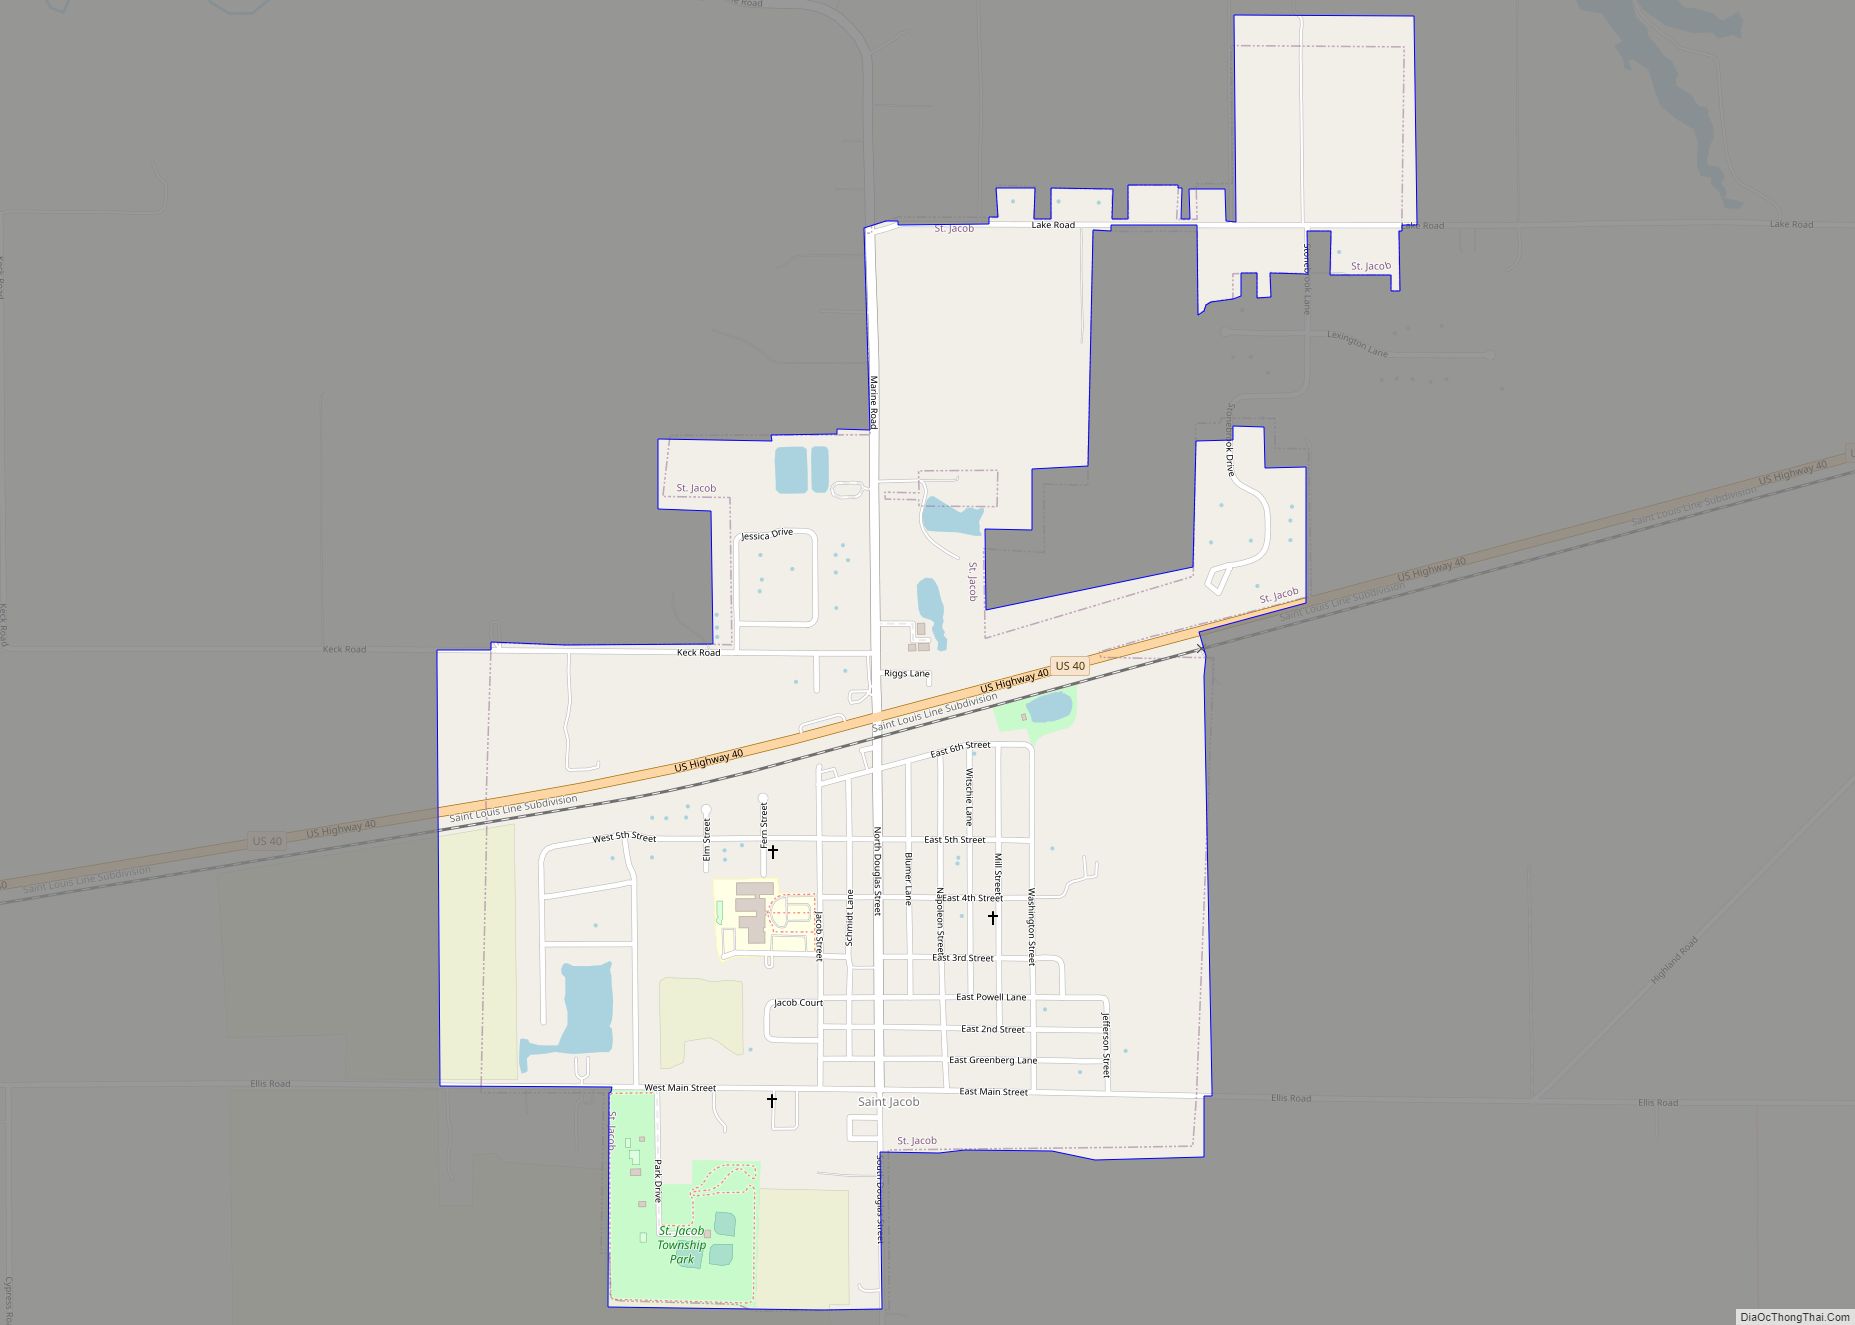 Map of St. Jacob village